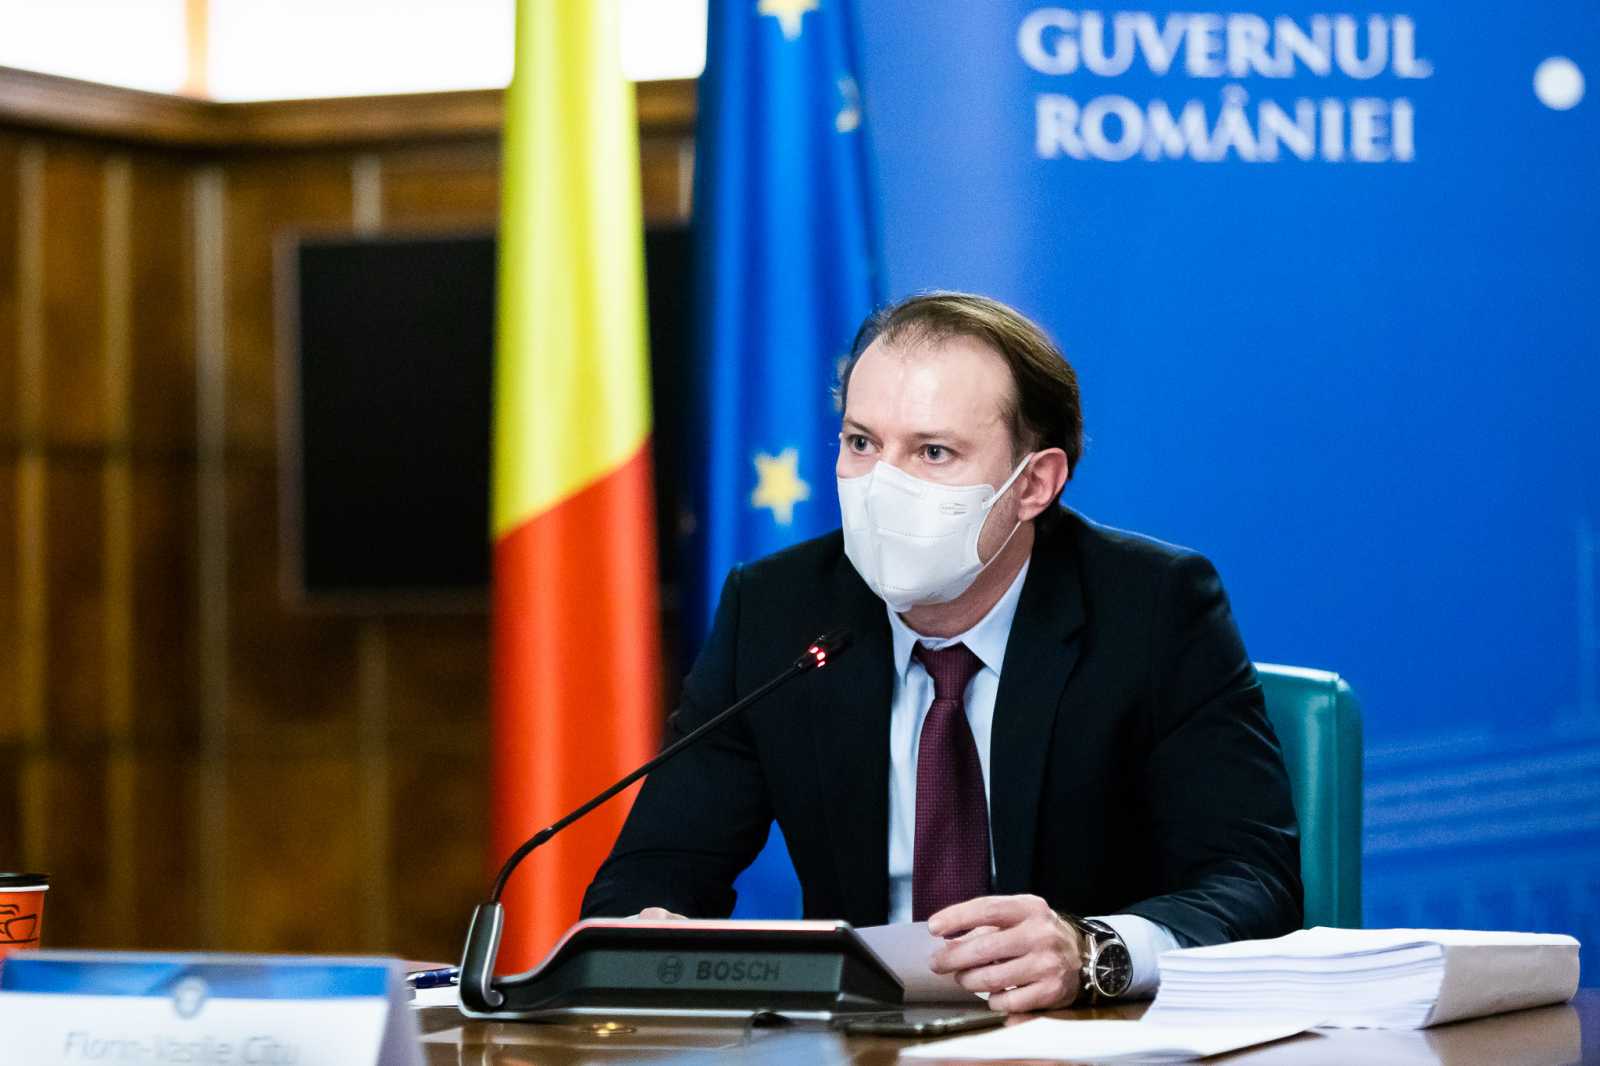 Florin Cîțu, a PNL elnöke | Fotó: gov.ro 